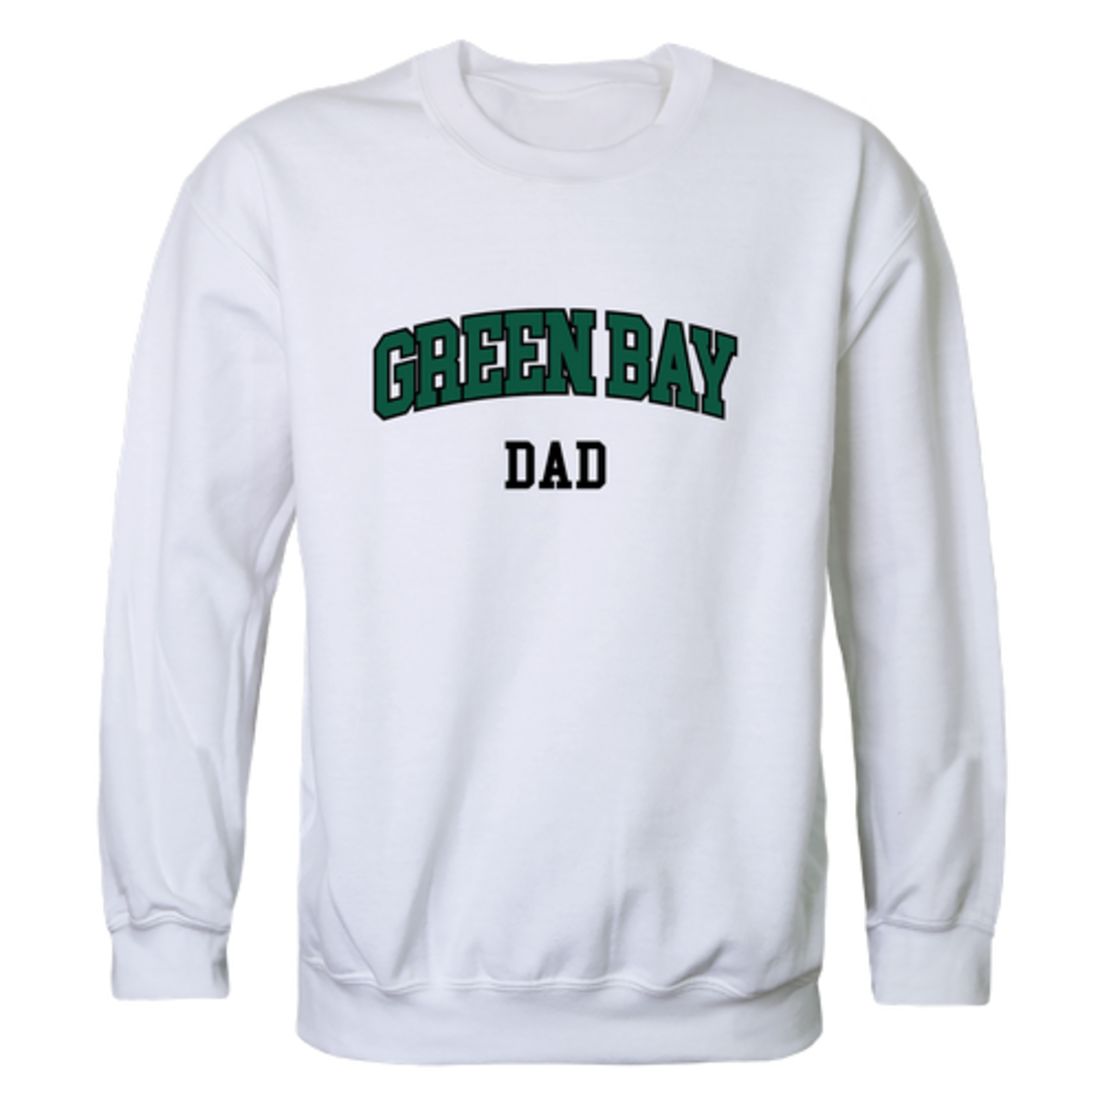 UWGB University of Wisconsin-Green Bay Phoenix Dad Fleece Crewneck Pullover Sweatshirt Forest-Campus-Wardrobe